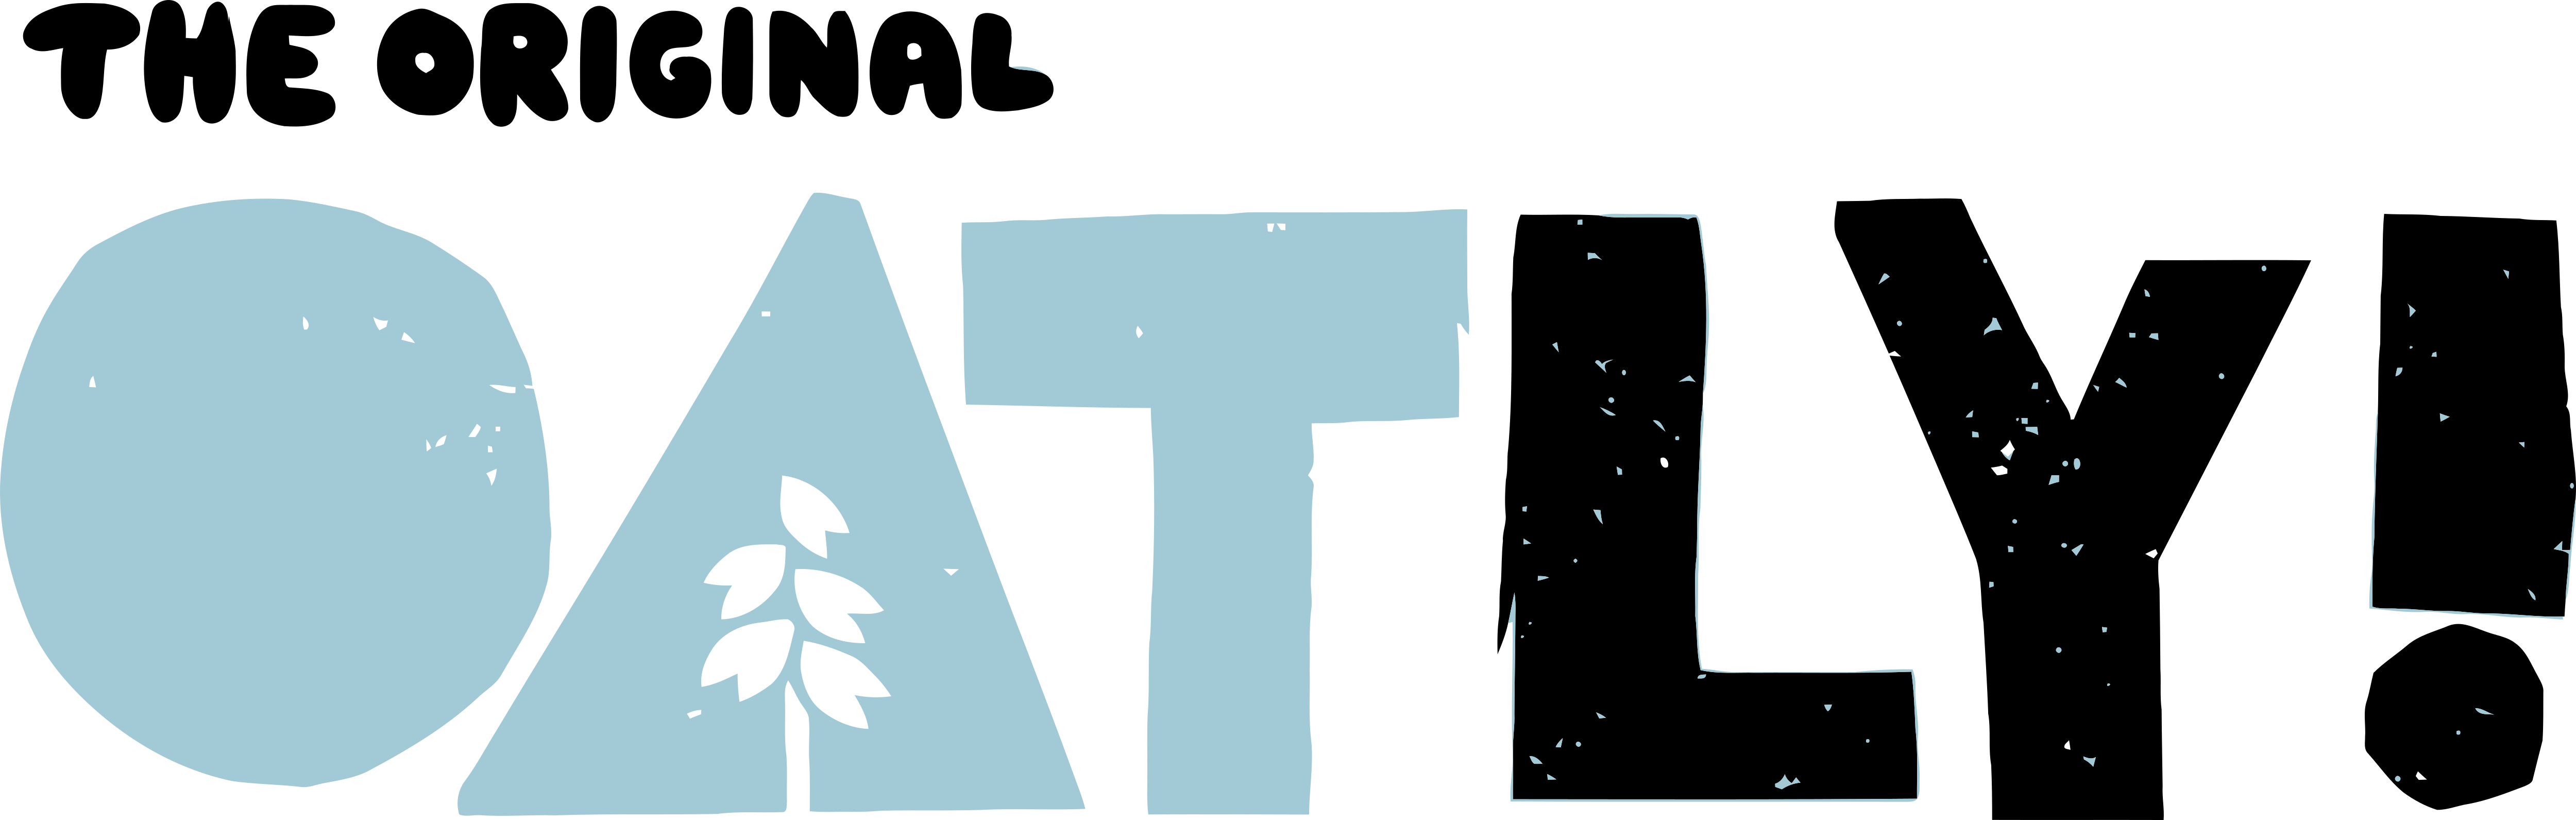 Oatly_Logo